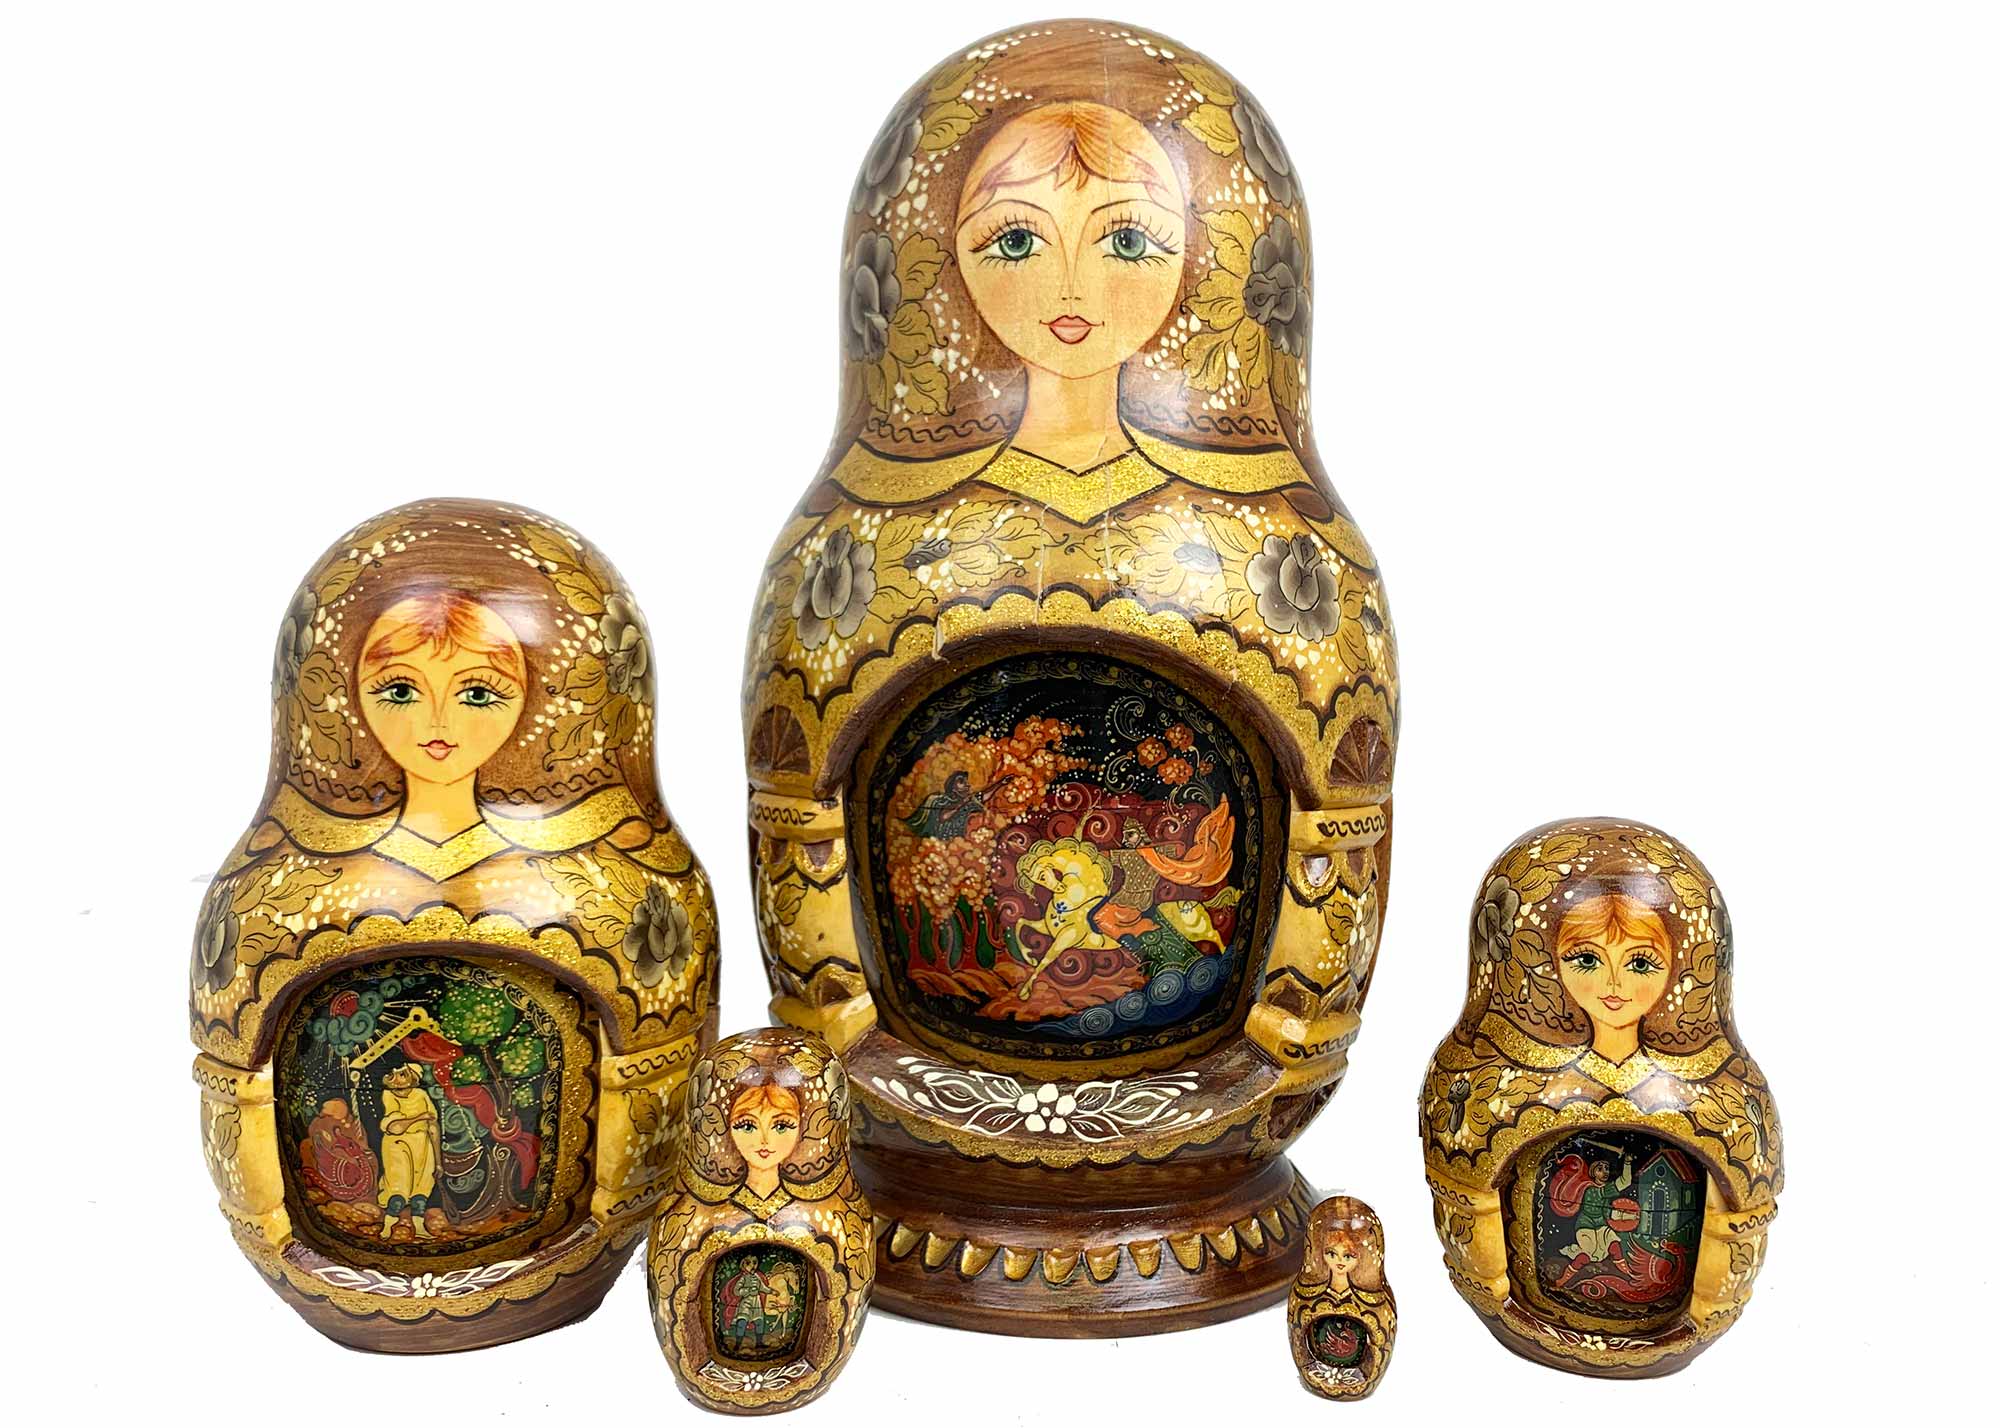 Buy Brown/Gold Deluxe Nesting Dolls w/ Palekh Scenes in multiple windows 10pc./9" at GoldenCockerel.com